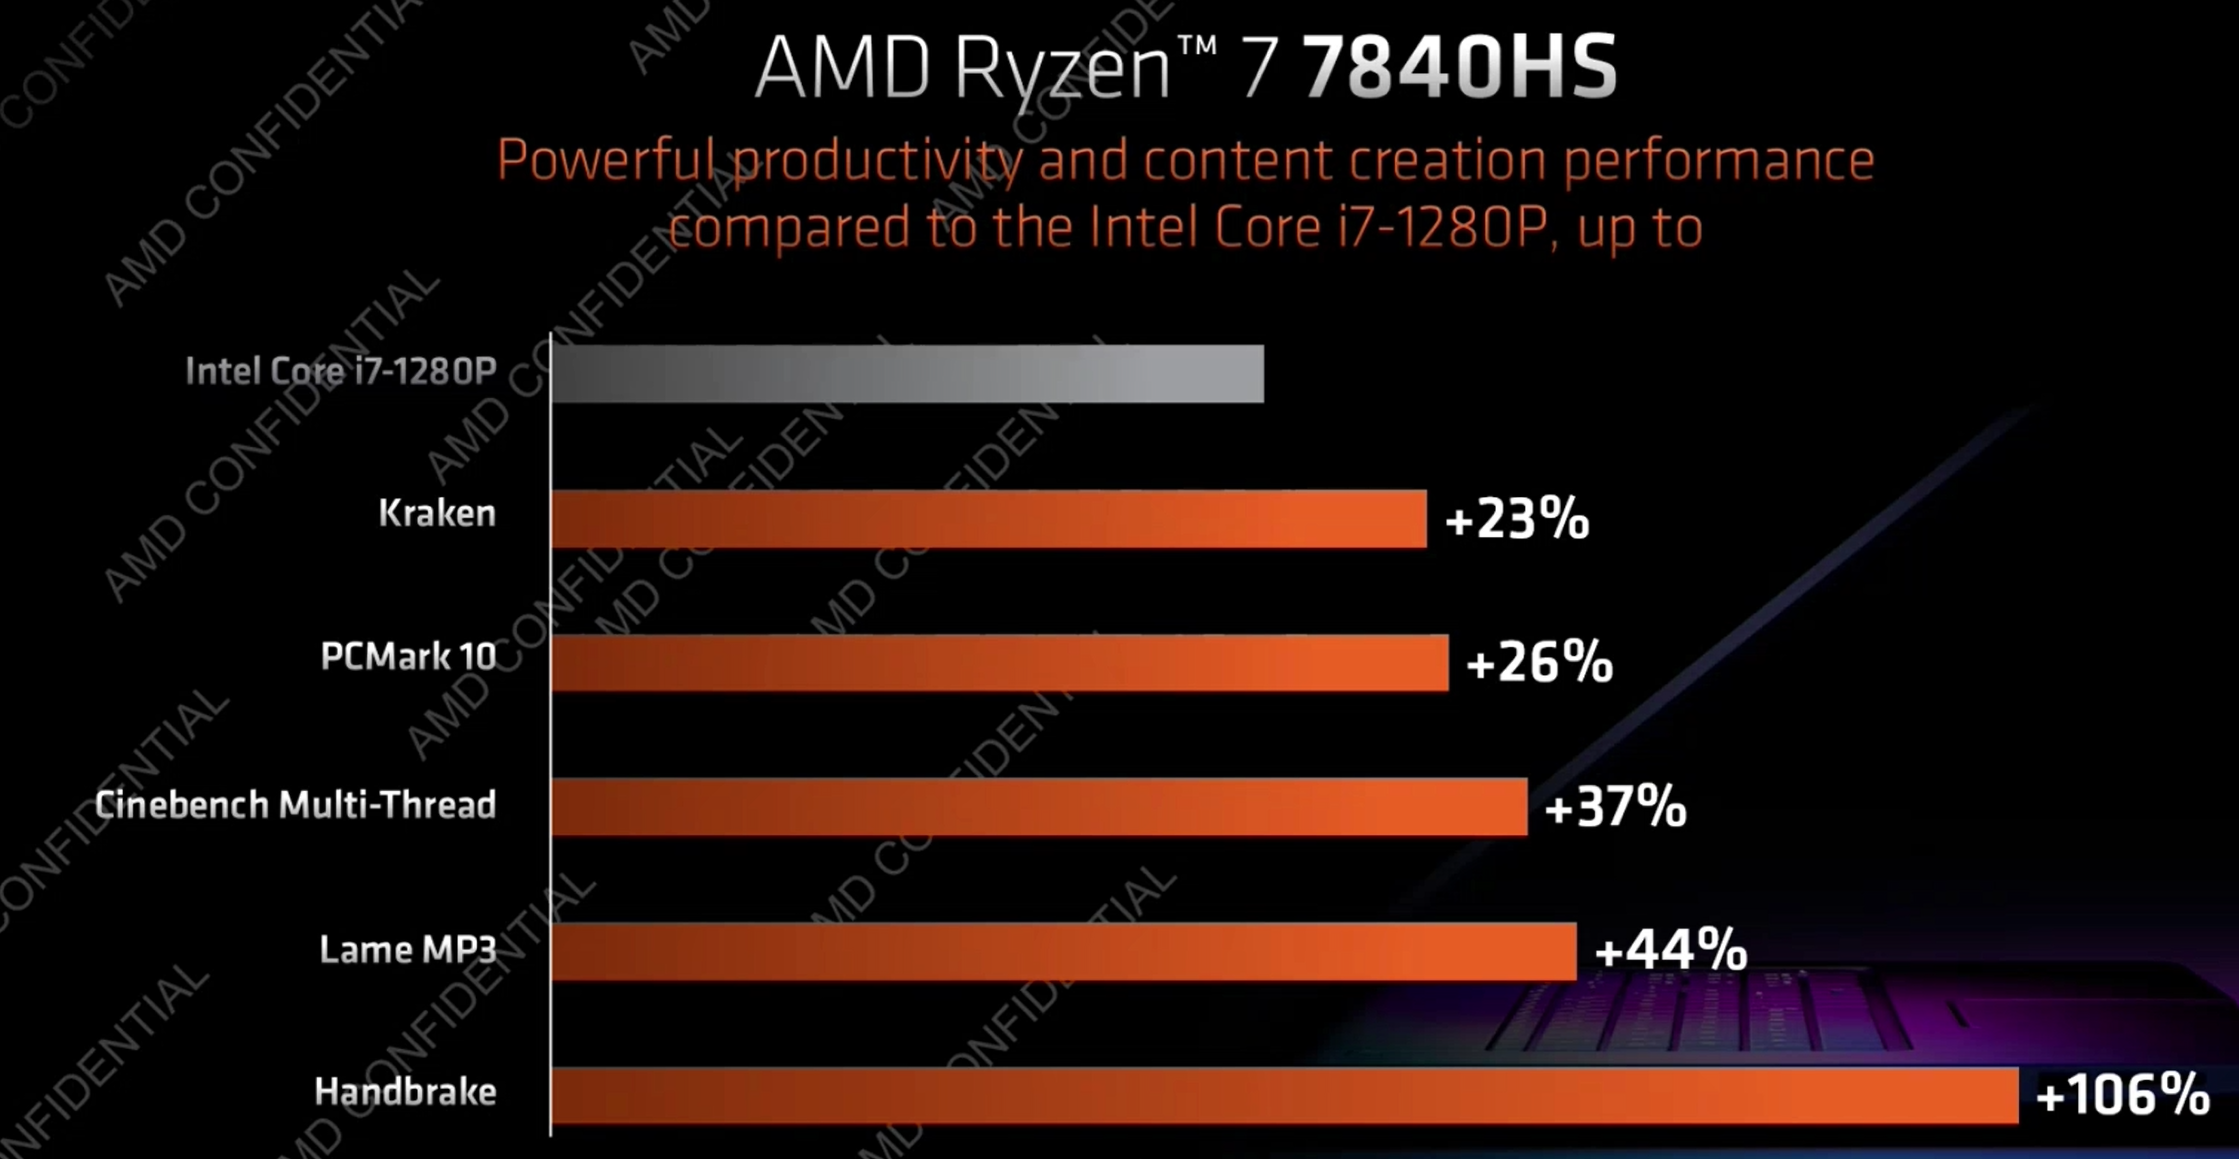 AMD Ryzen 7 7840HS mobil produktivitet